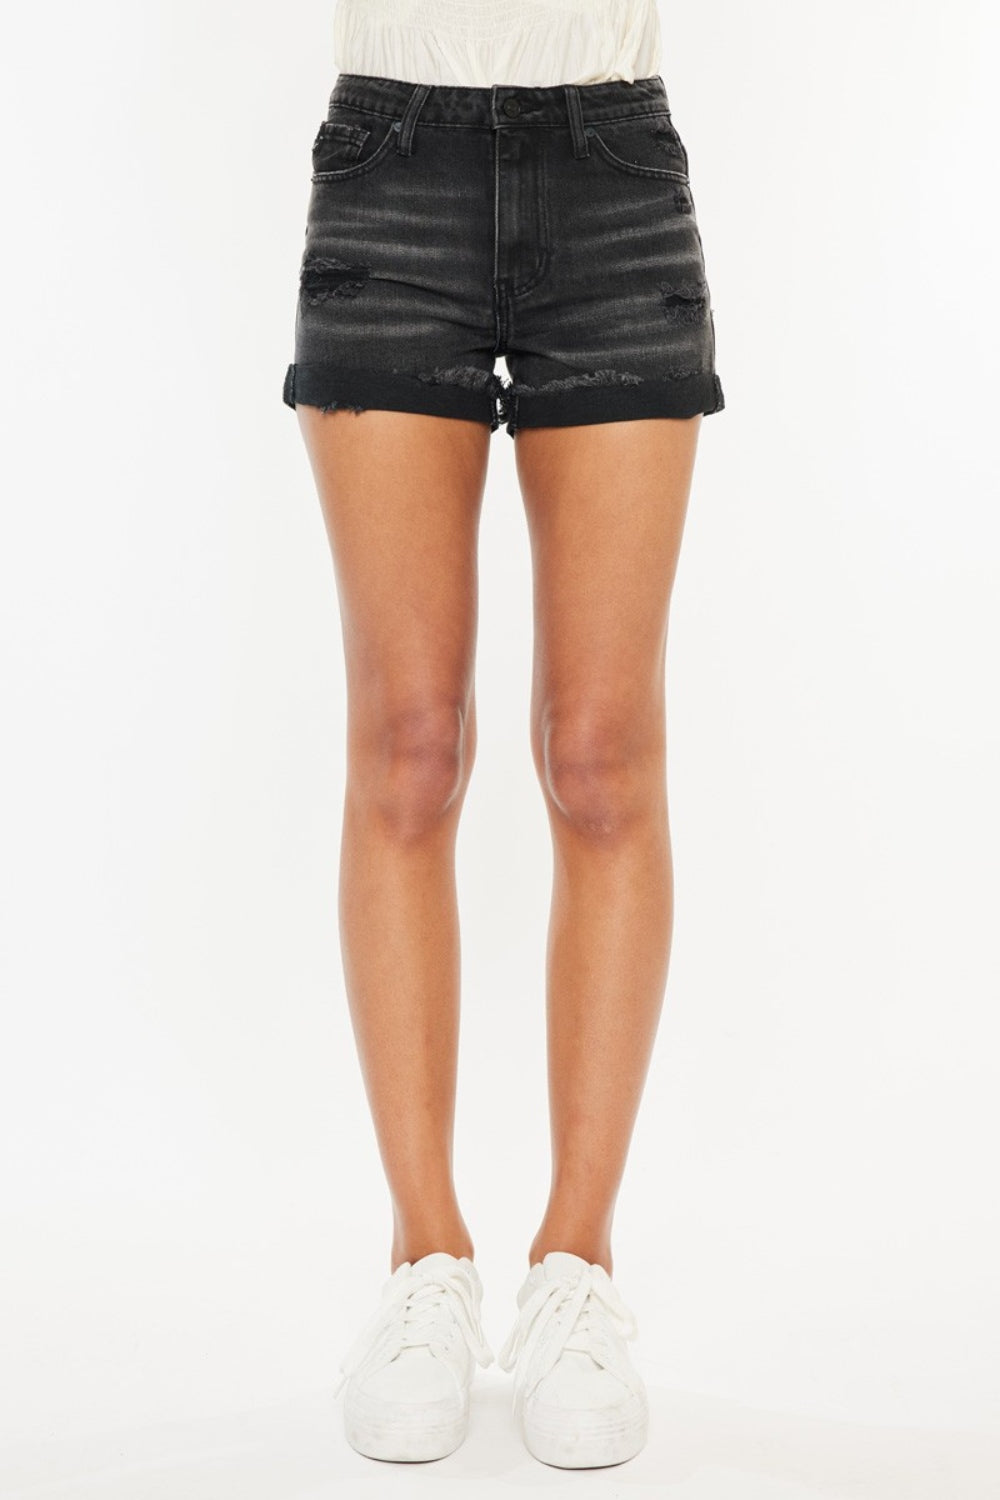 Kancan High Waist Distressed Denim Shorts-Shorts-Krush Kandy, Women's Online Fashion Boutique Located in Phoenix, Arizona (Scottsdale Area)